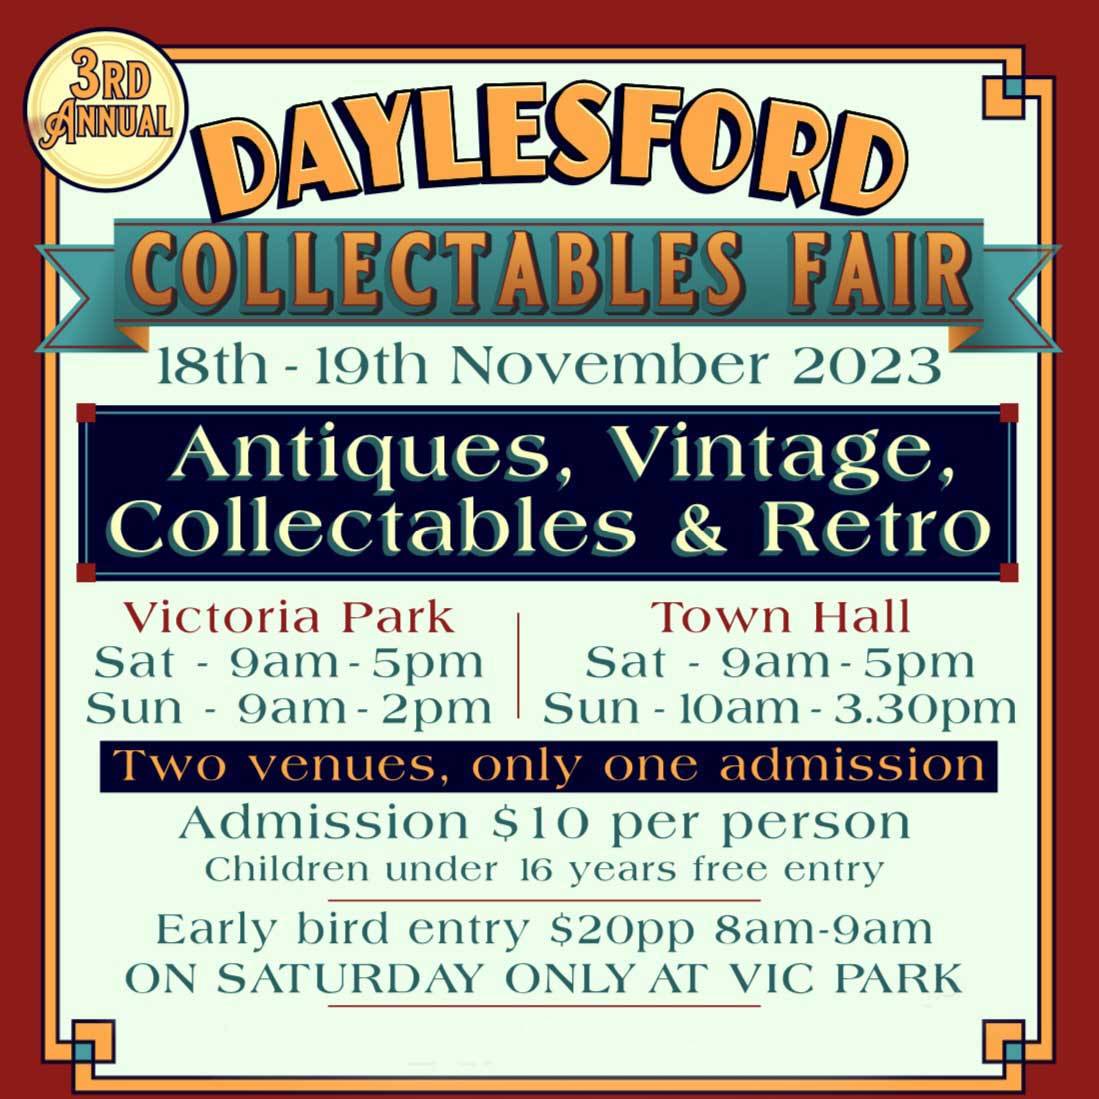 Daylesford Collectables Fair